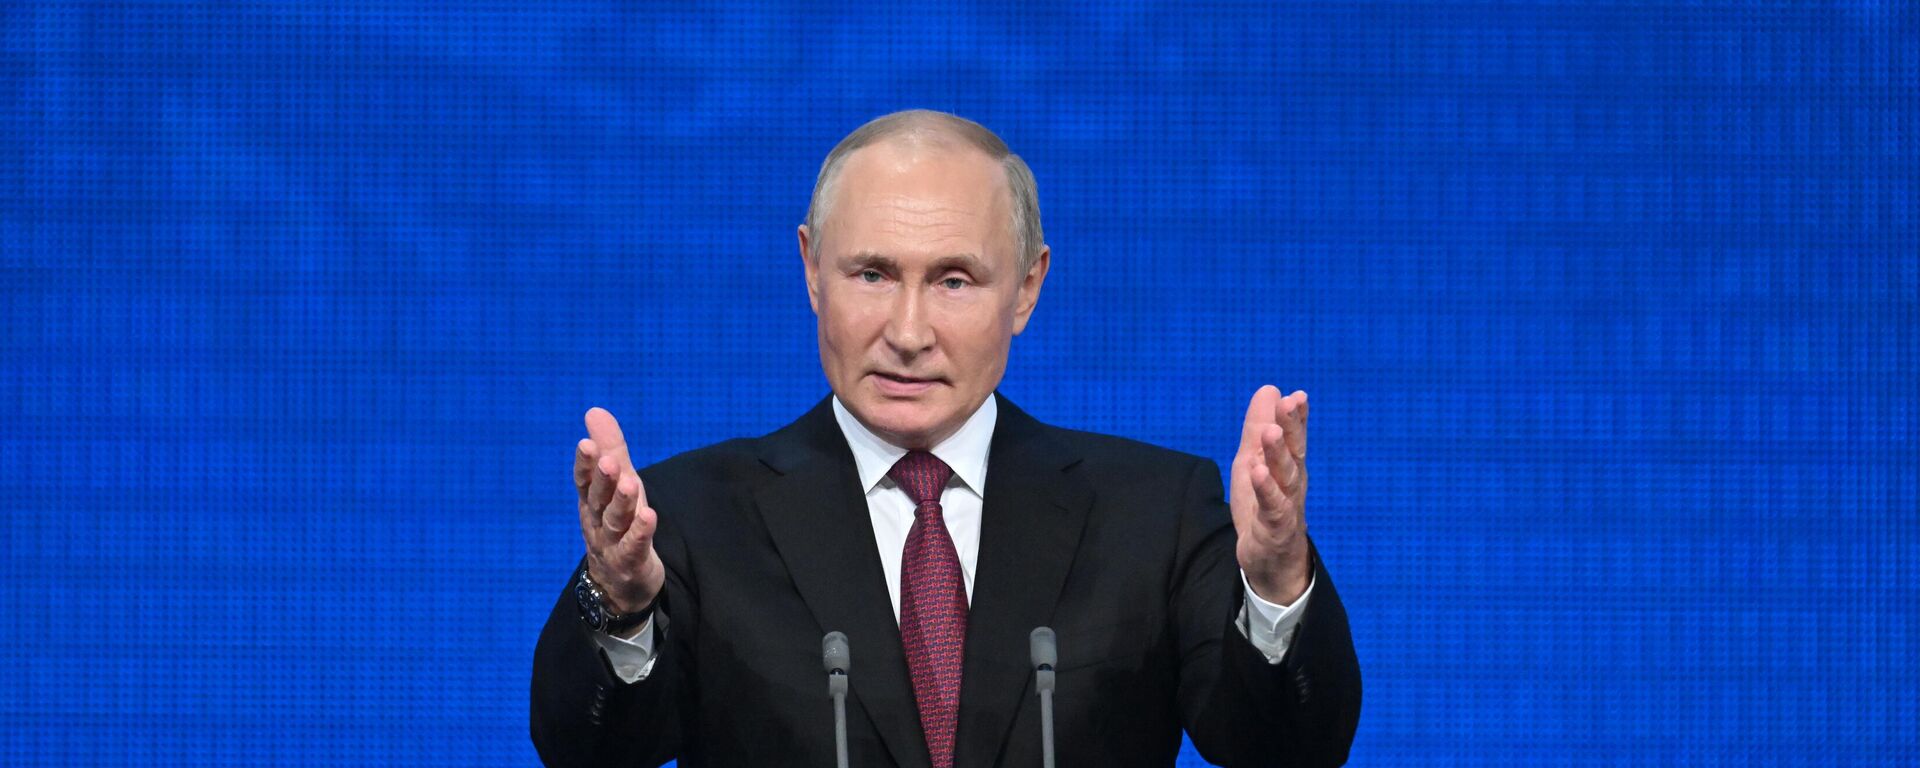 O presidente da Rússia, Vladimir Putin, discursa durante evento - Sputnik Brasil, 1920, 21.09.2022